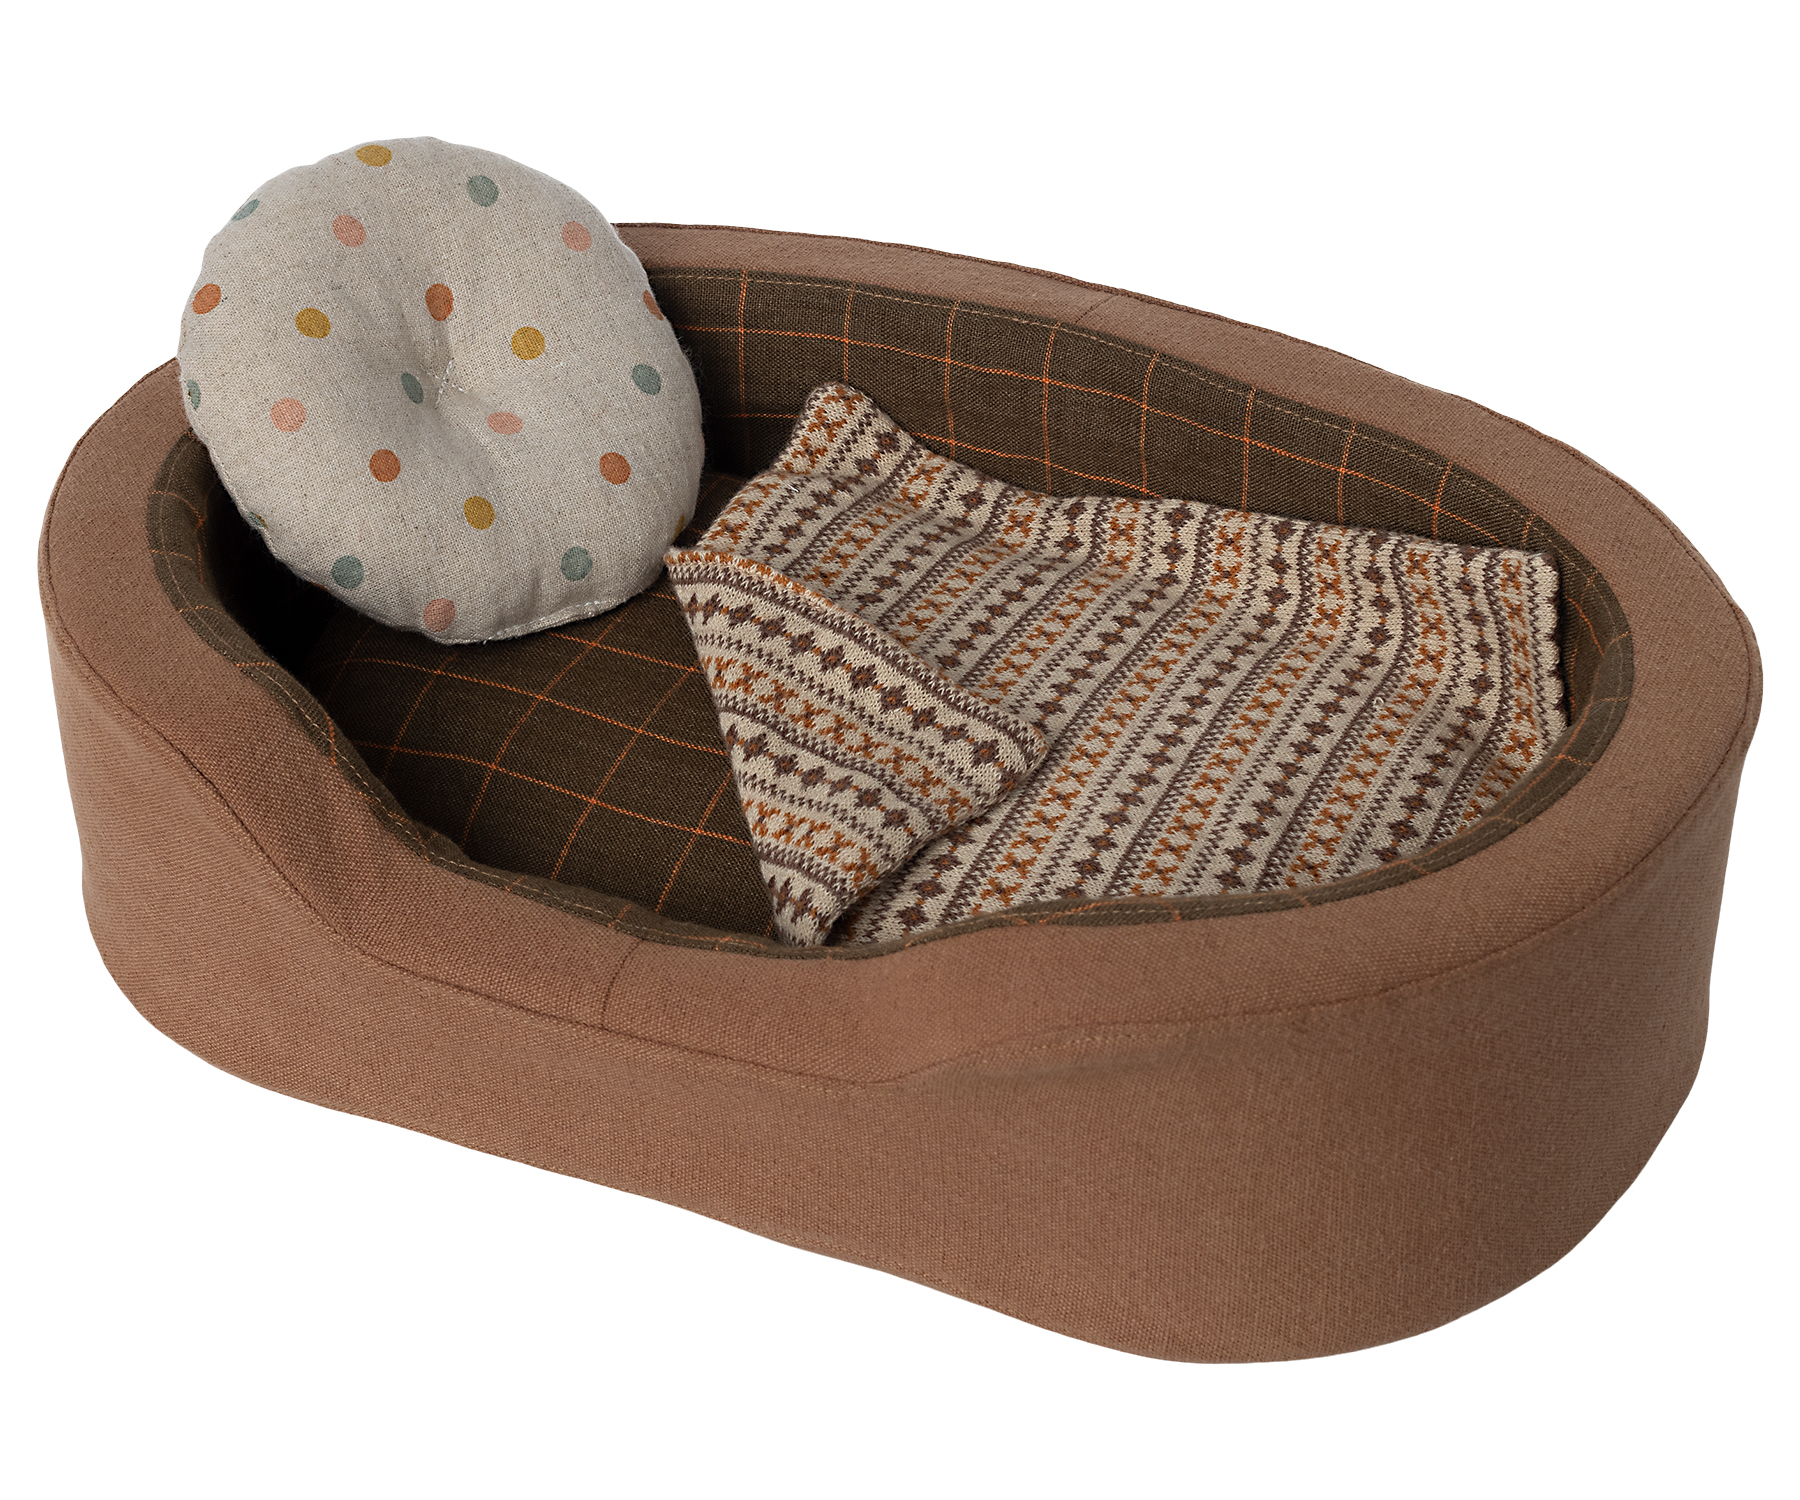 Dog basket - Brown